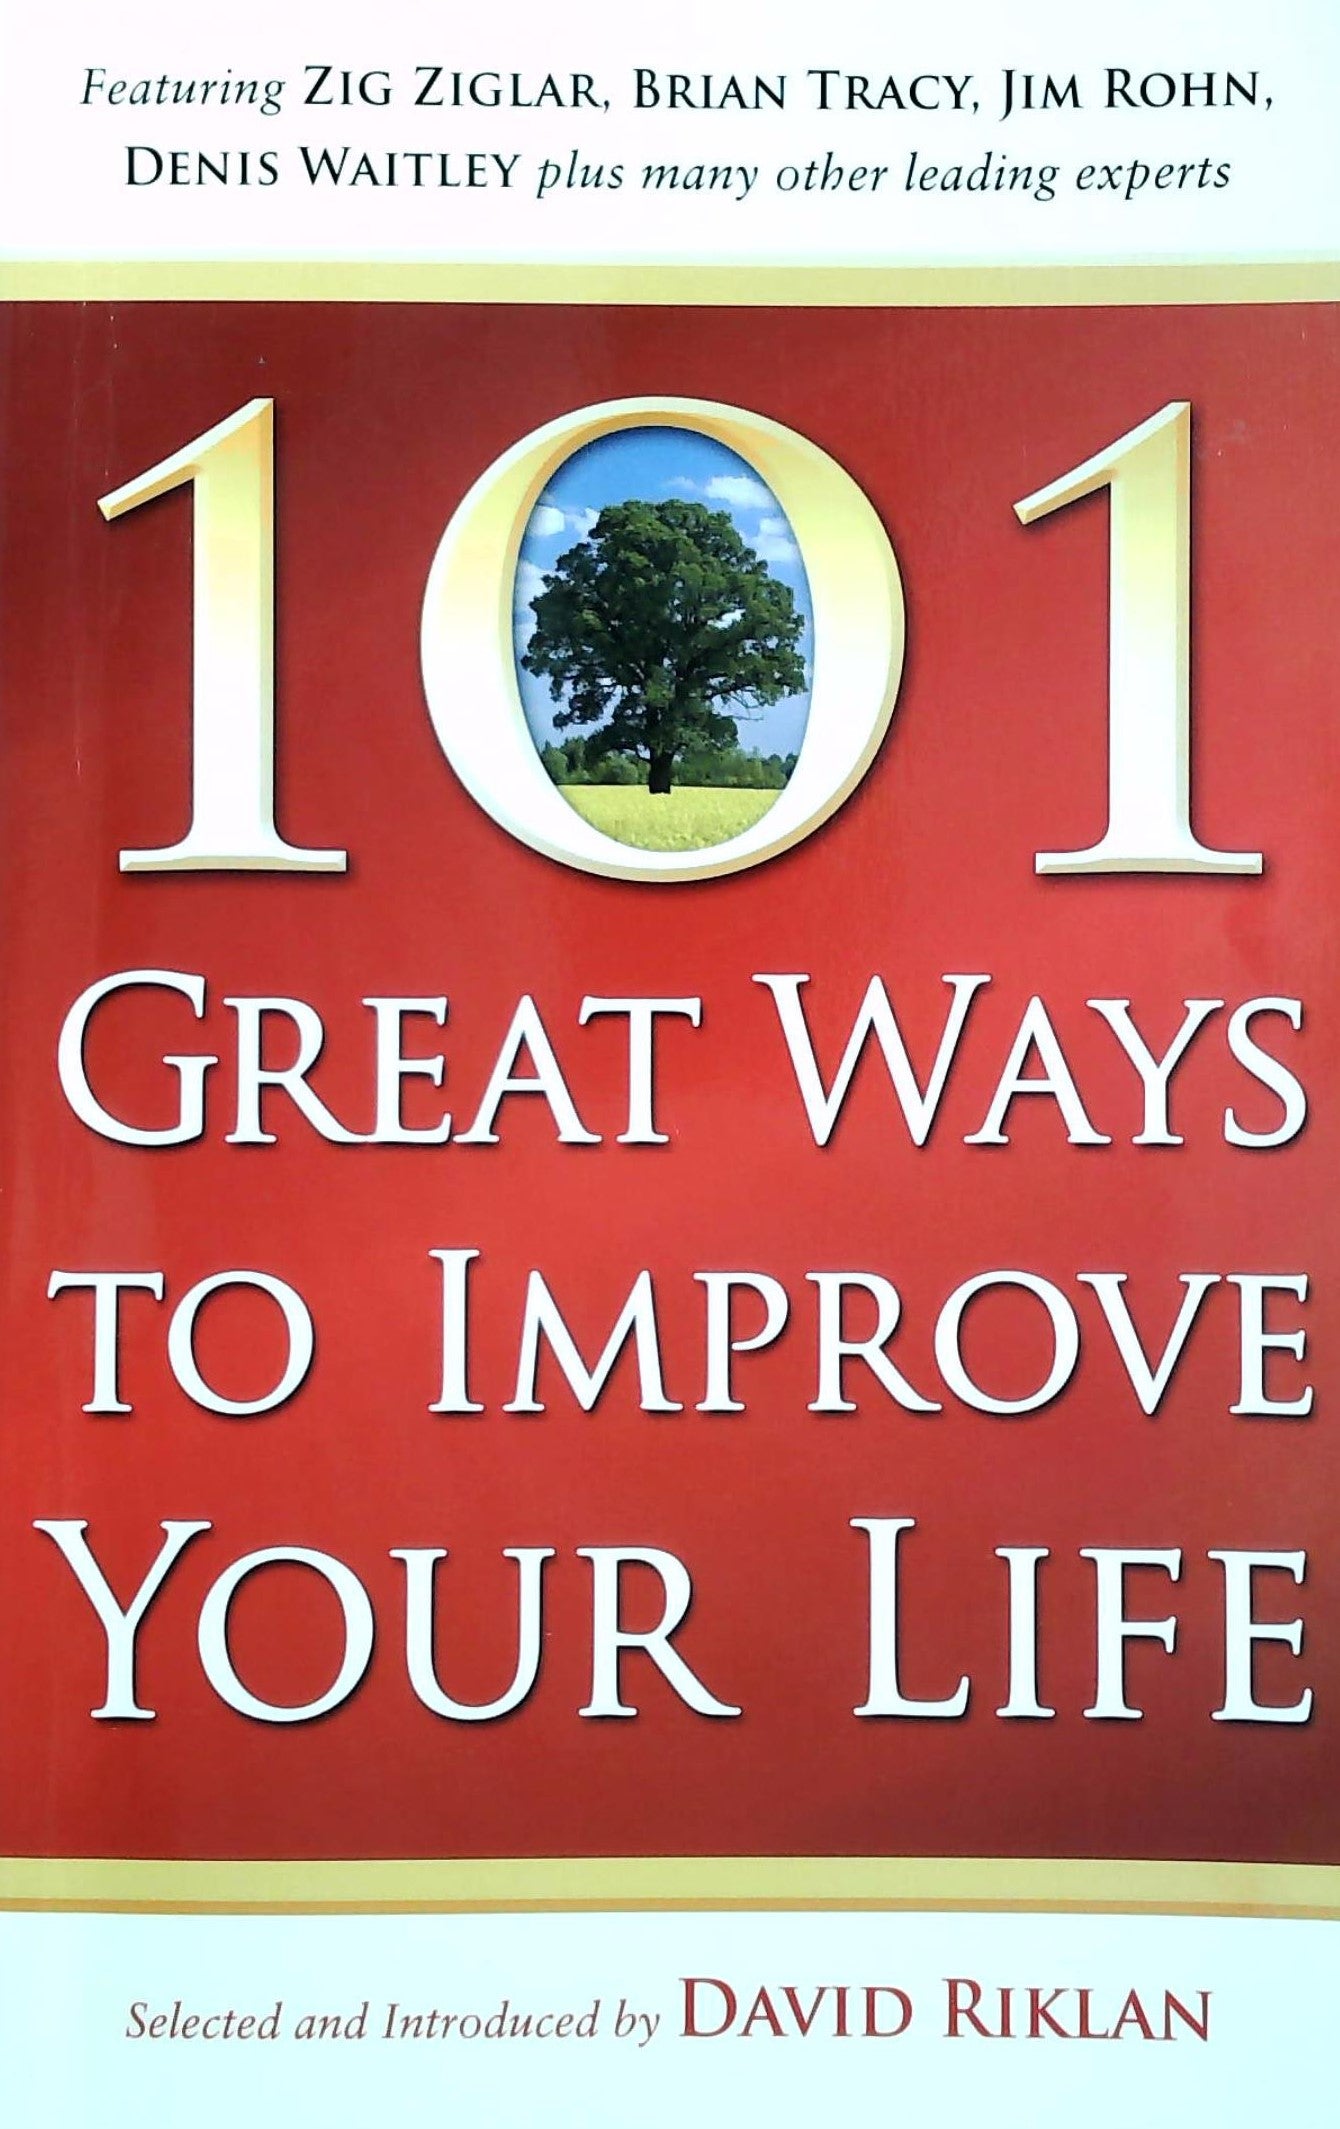 Livre ISBN 974567264 101 Great Ways to Improve Your Life # 1 (David Riklan)